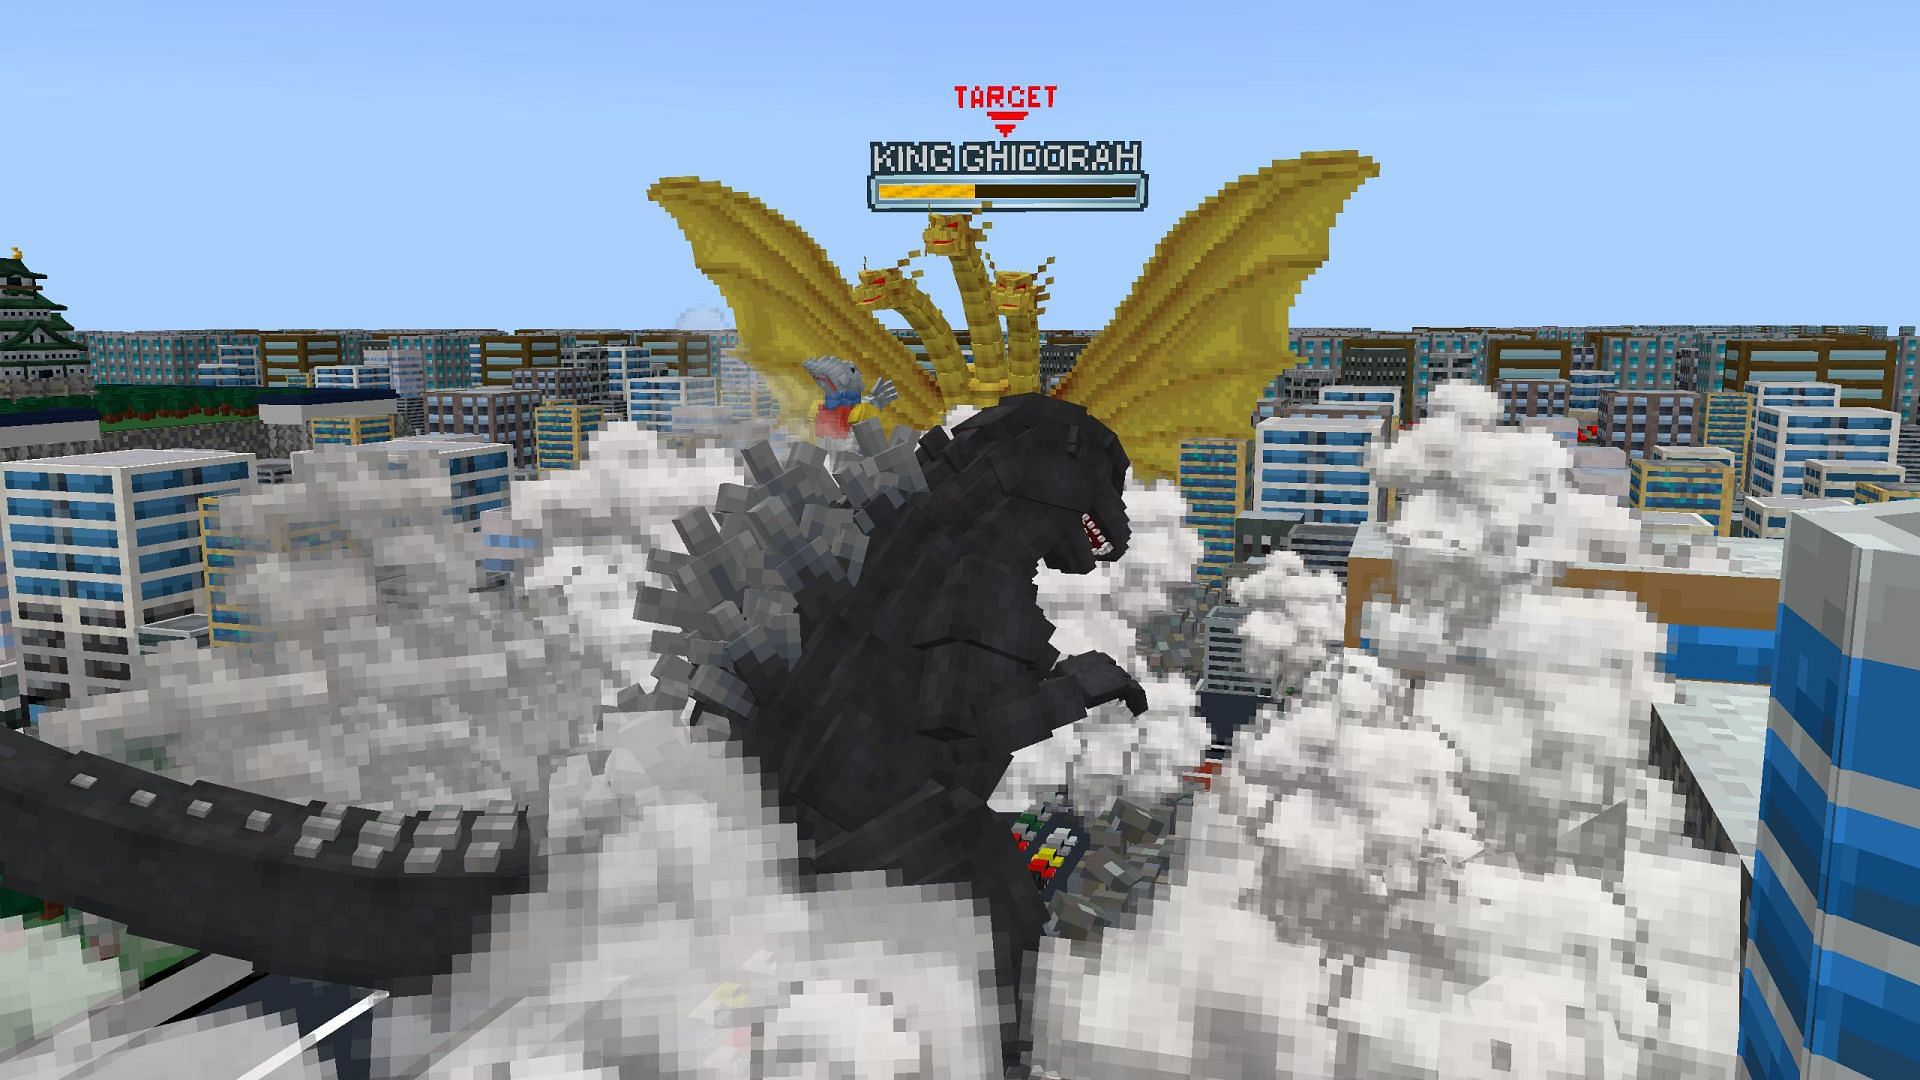 Godzilla vs King Ghidorah (image via Mojang Studios)